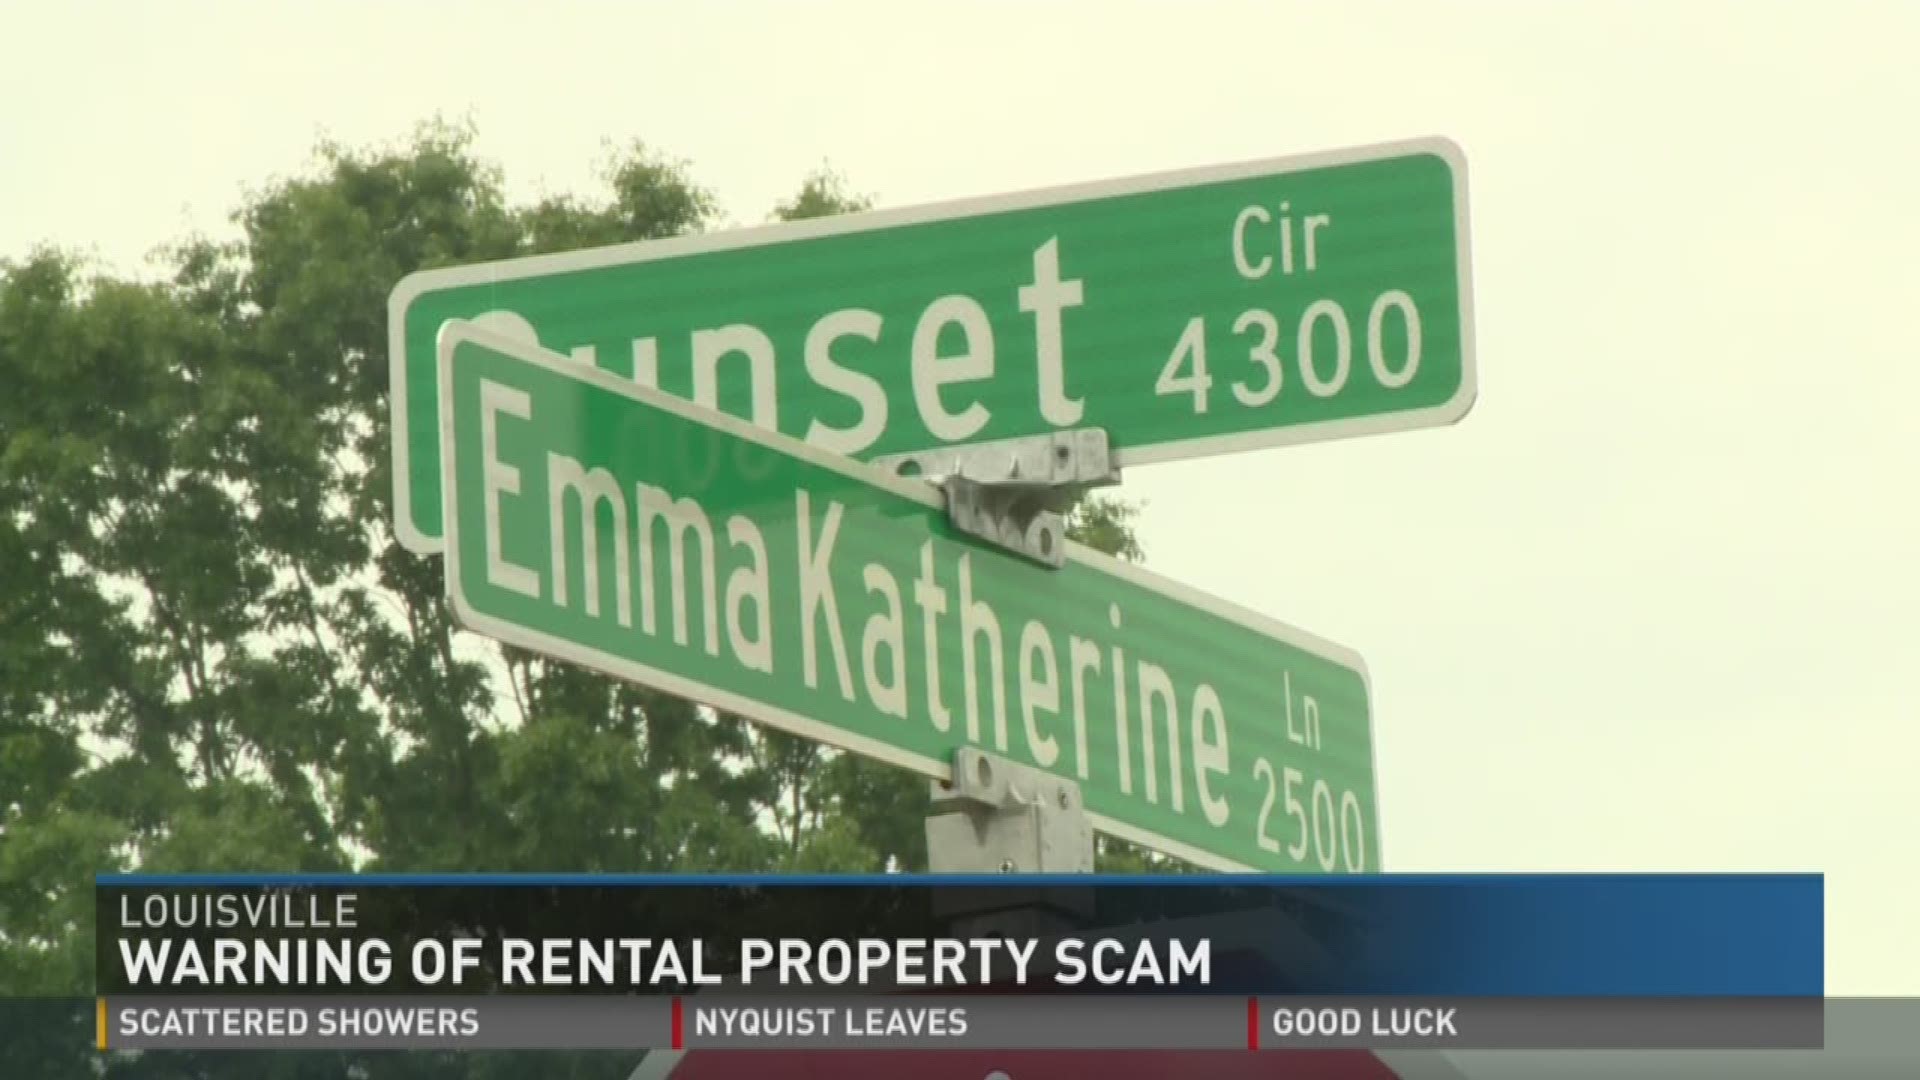 Warning of rental property scam